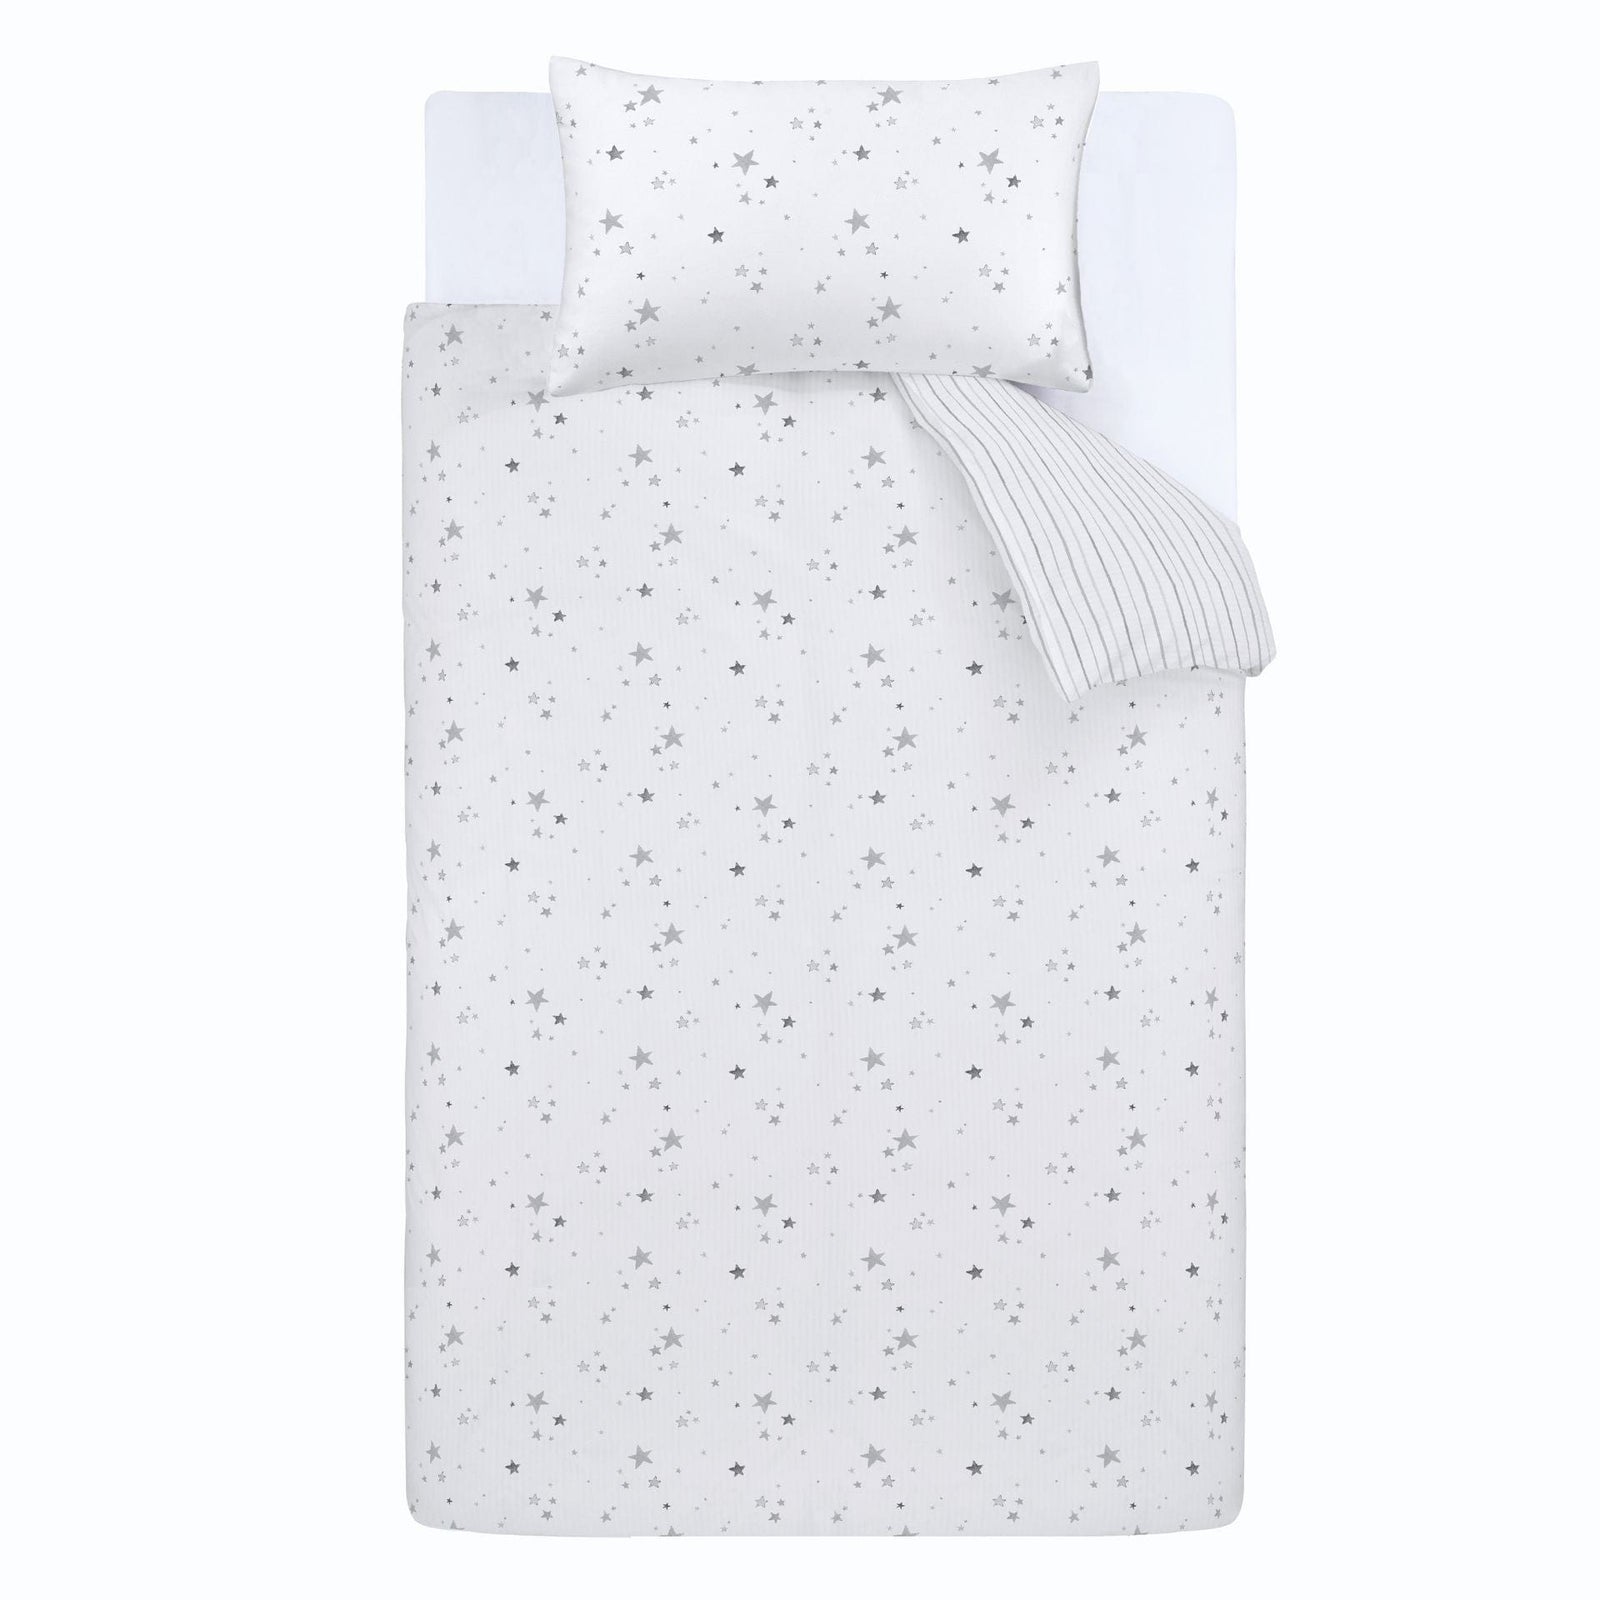 Little Bianca Fine Linens Bedding Stars Cotton Duvet Cover Set with Pillowcase Grey